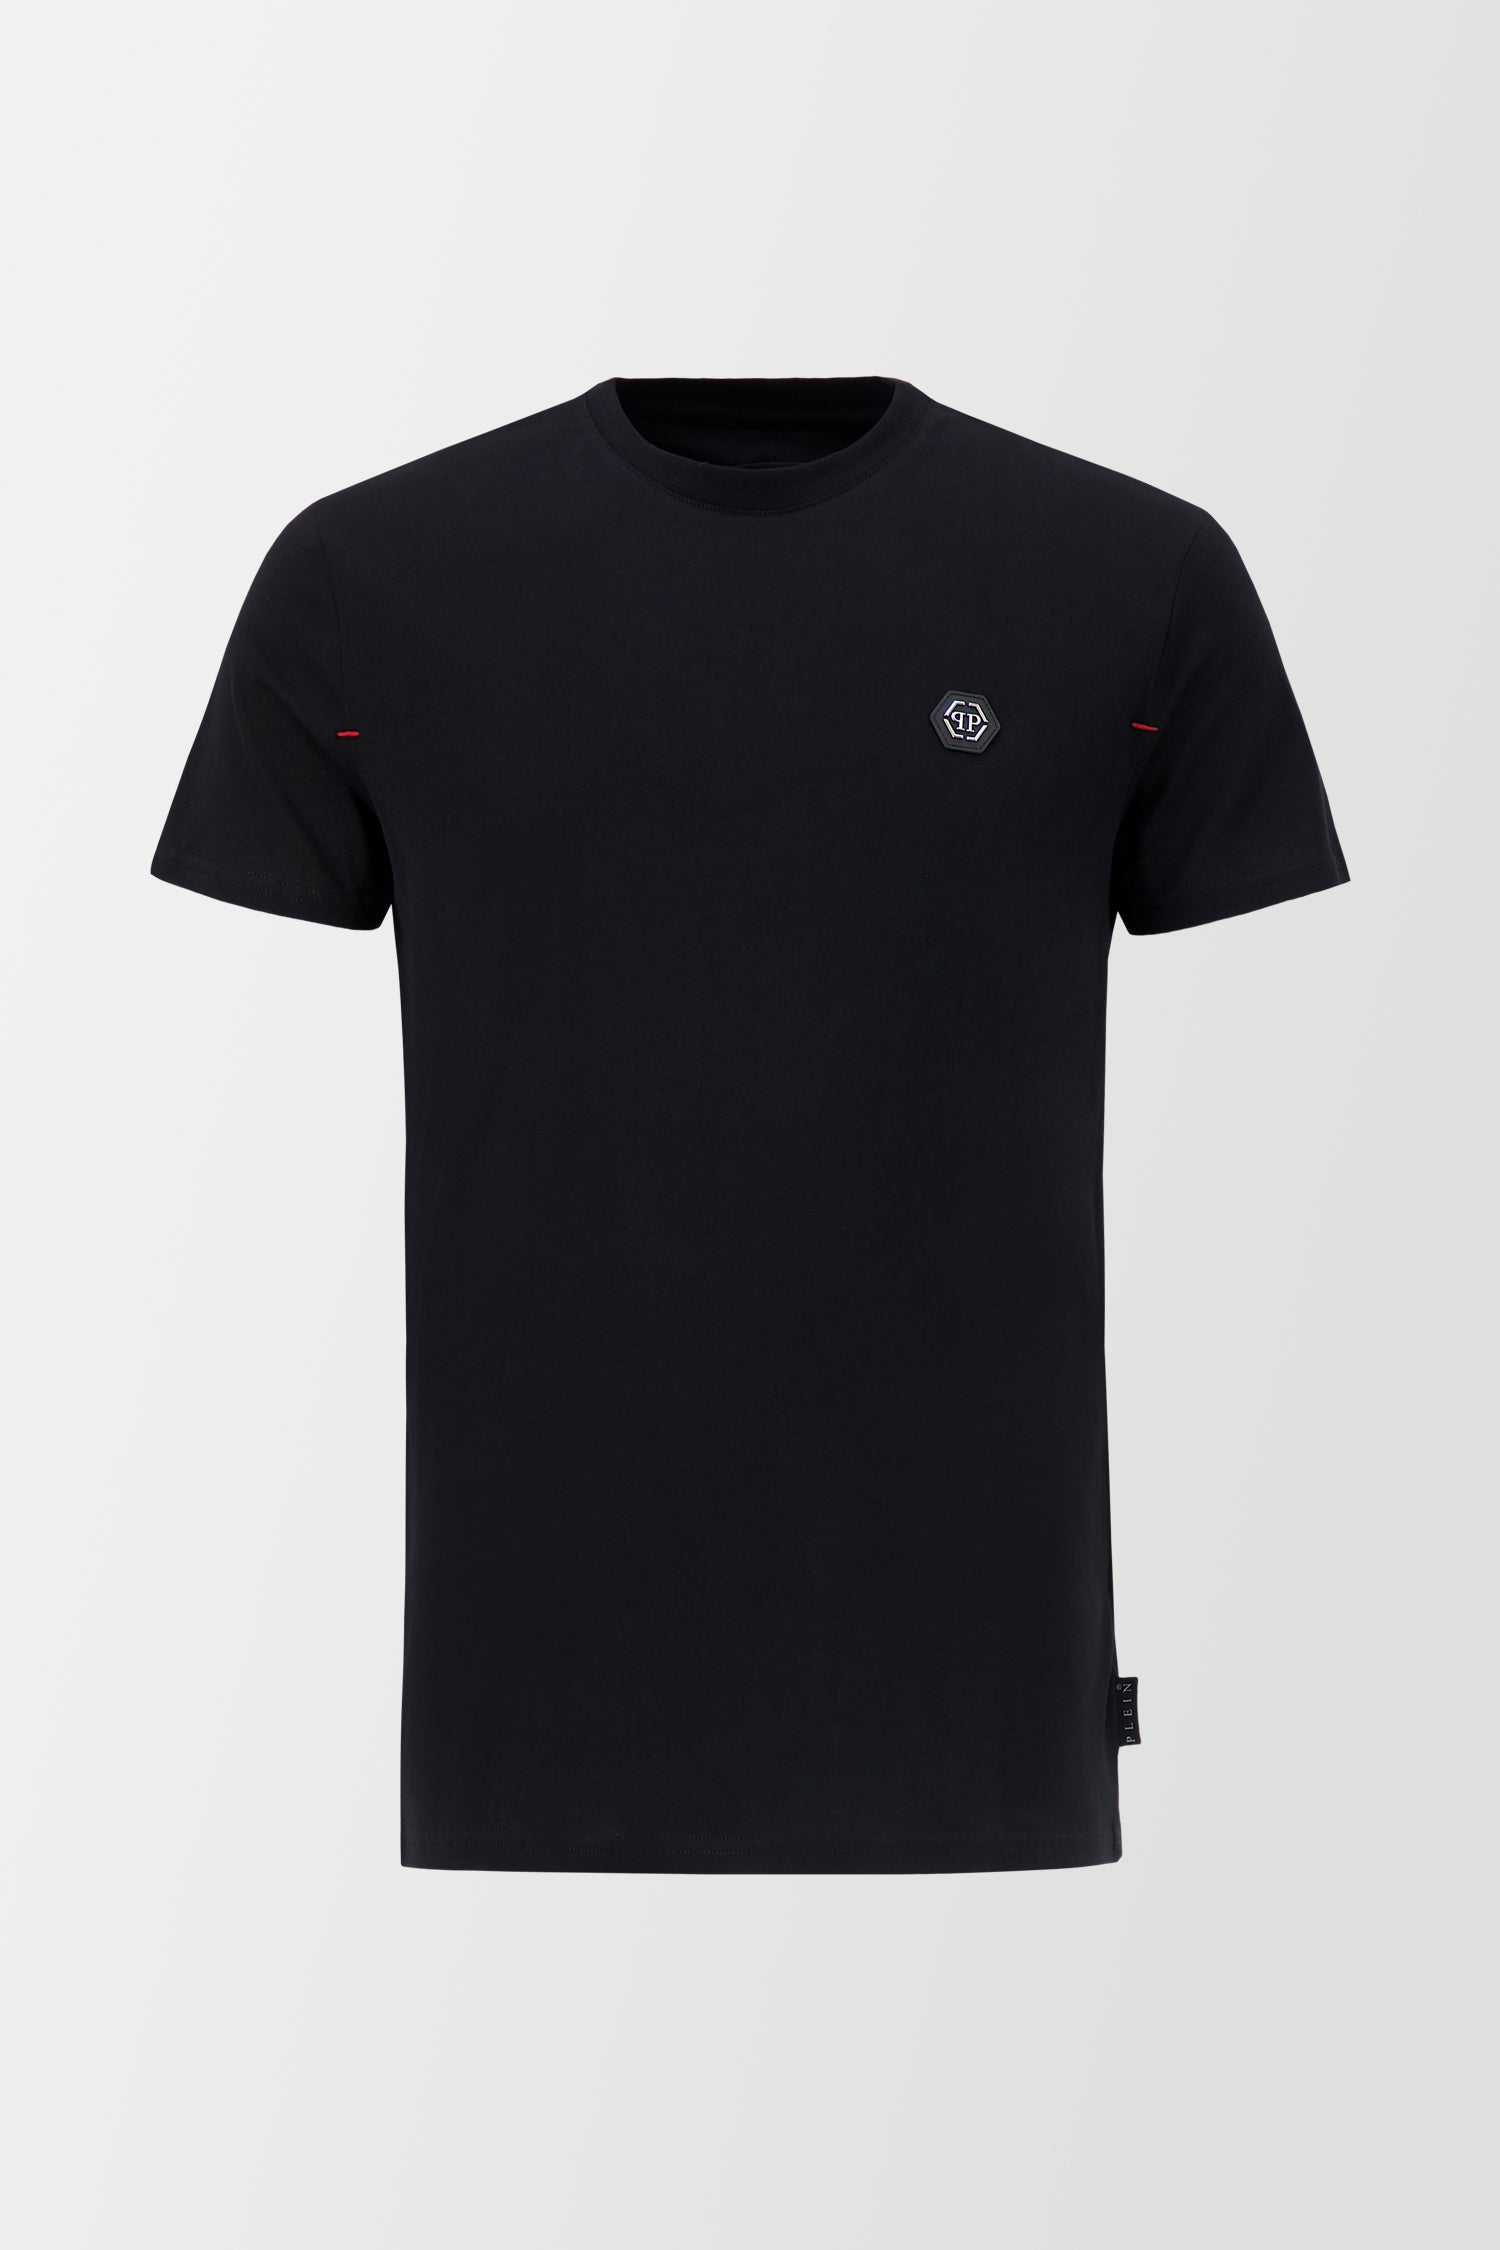 Philipp Plein Black Institutional T-Shirt